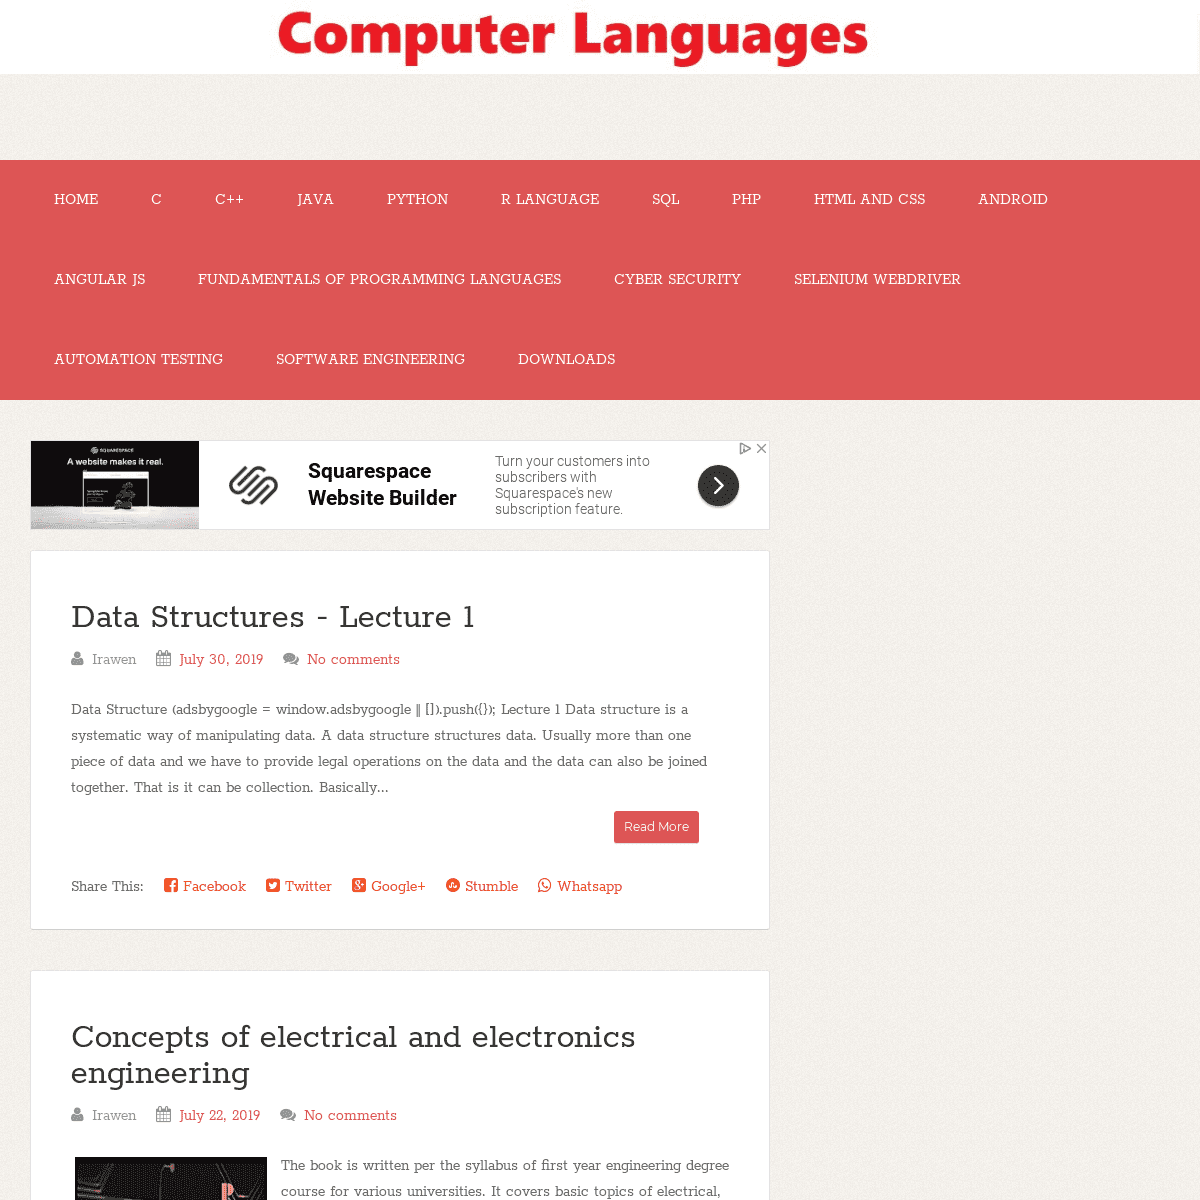                                                                                  Computer Languages